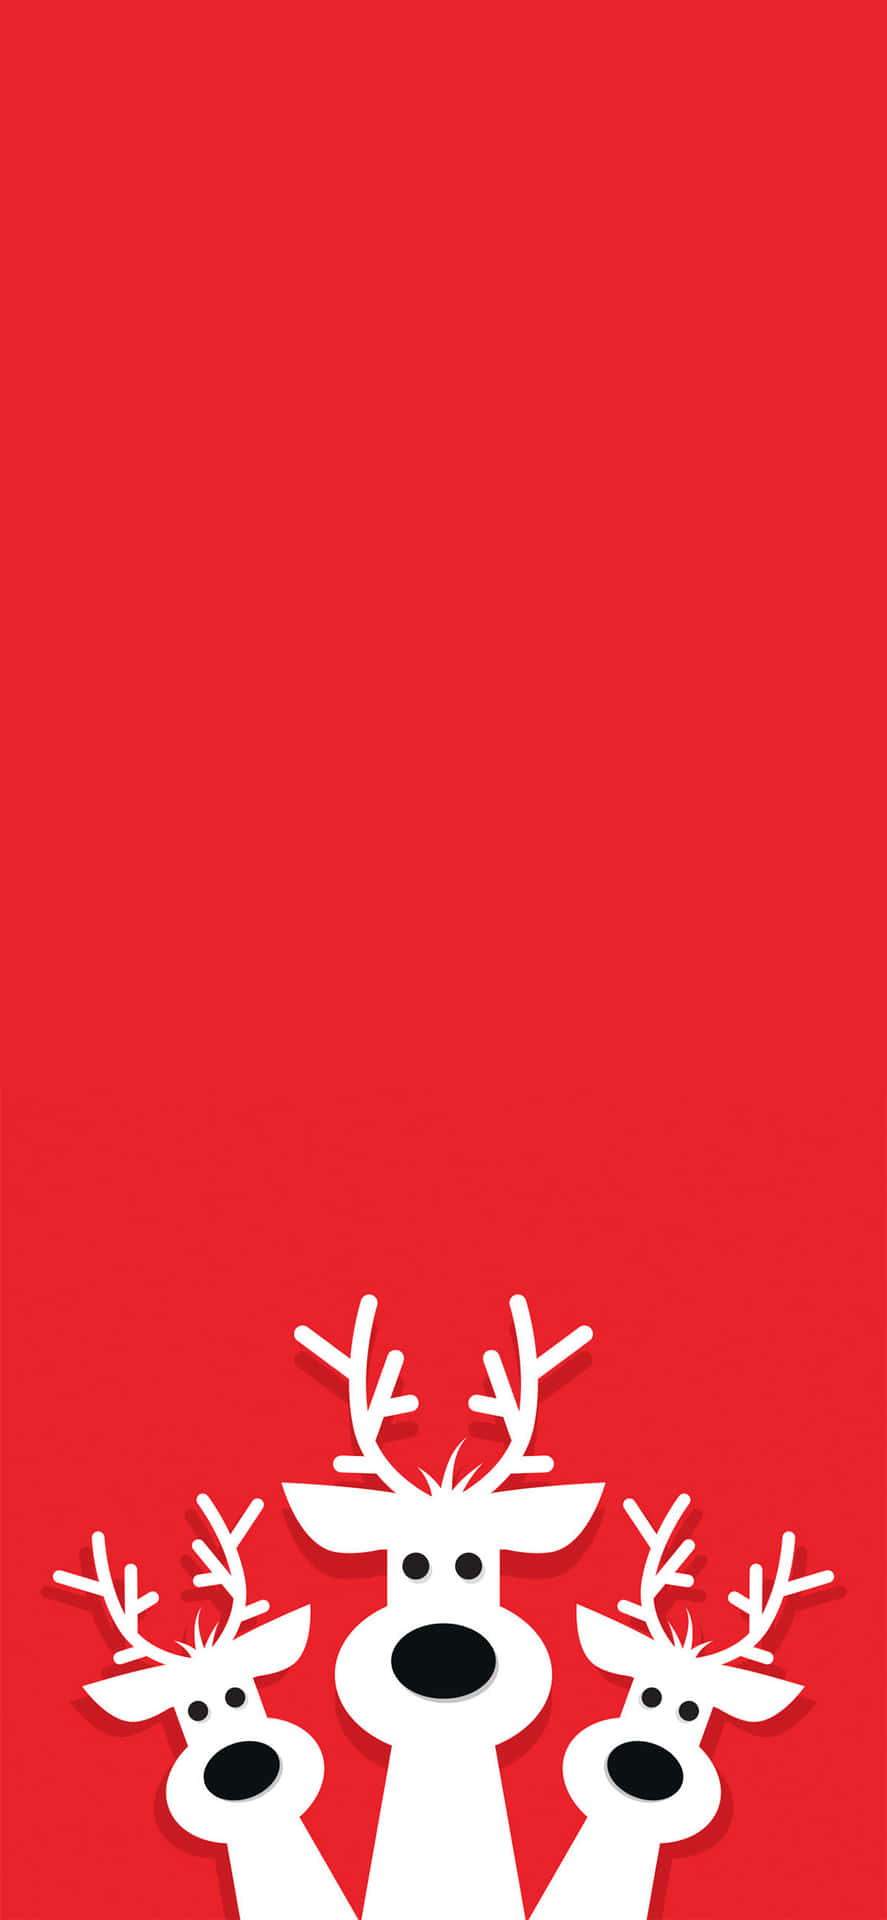 Fondods Rojos De Navidad Para IPhone